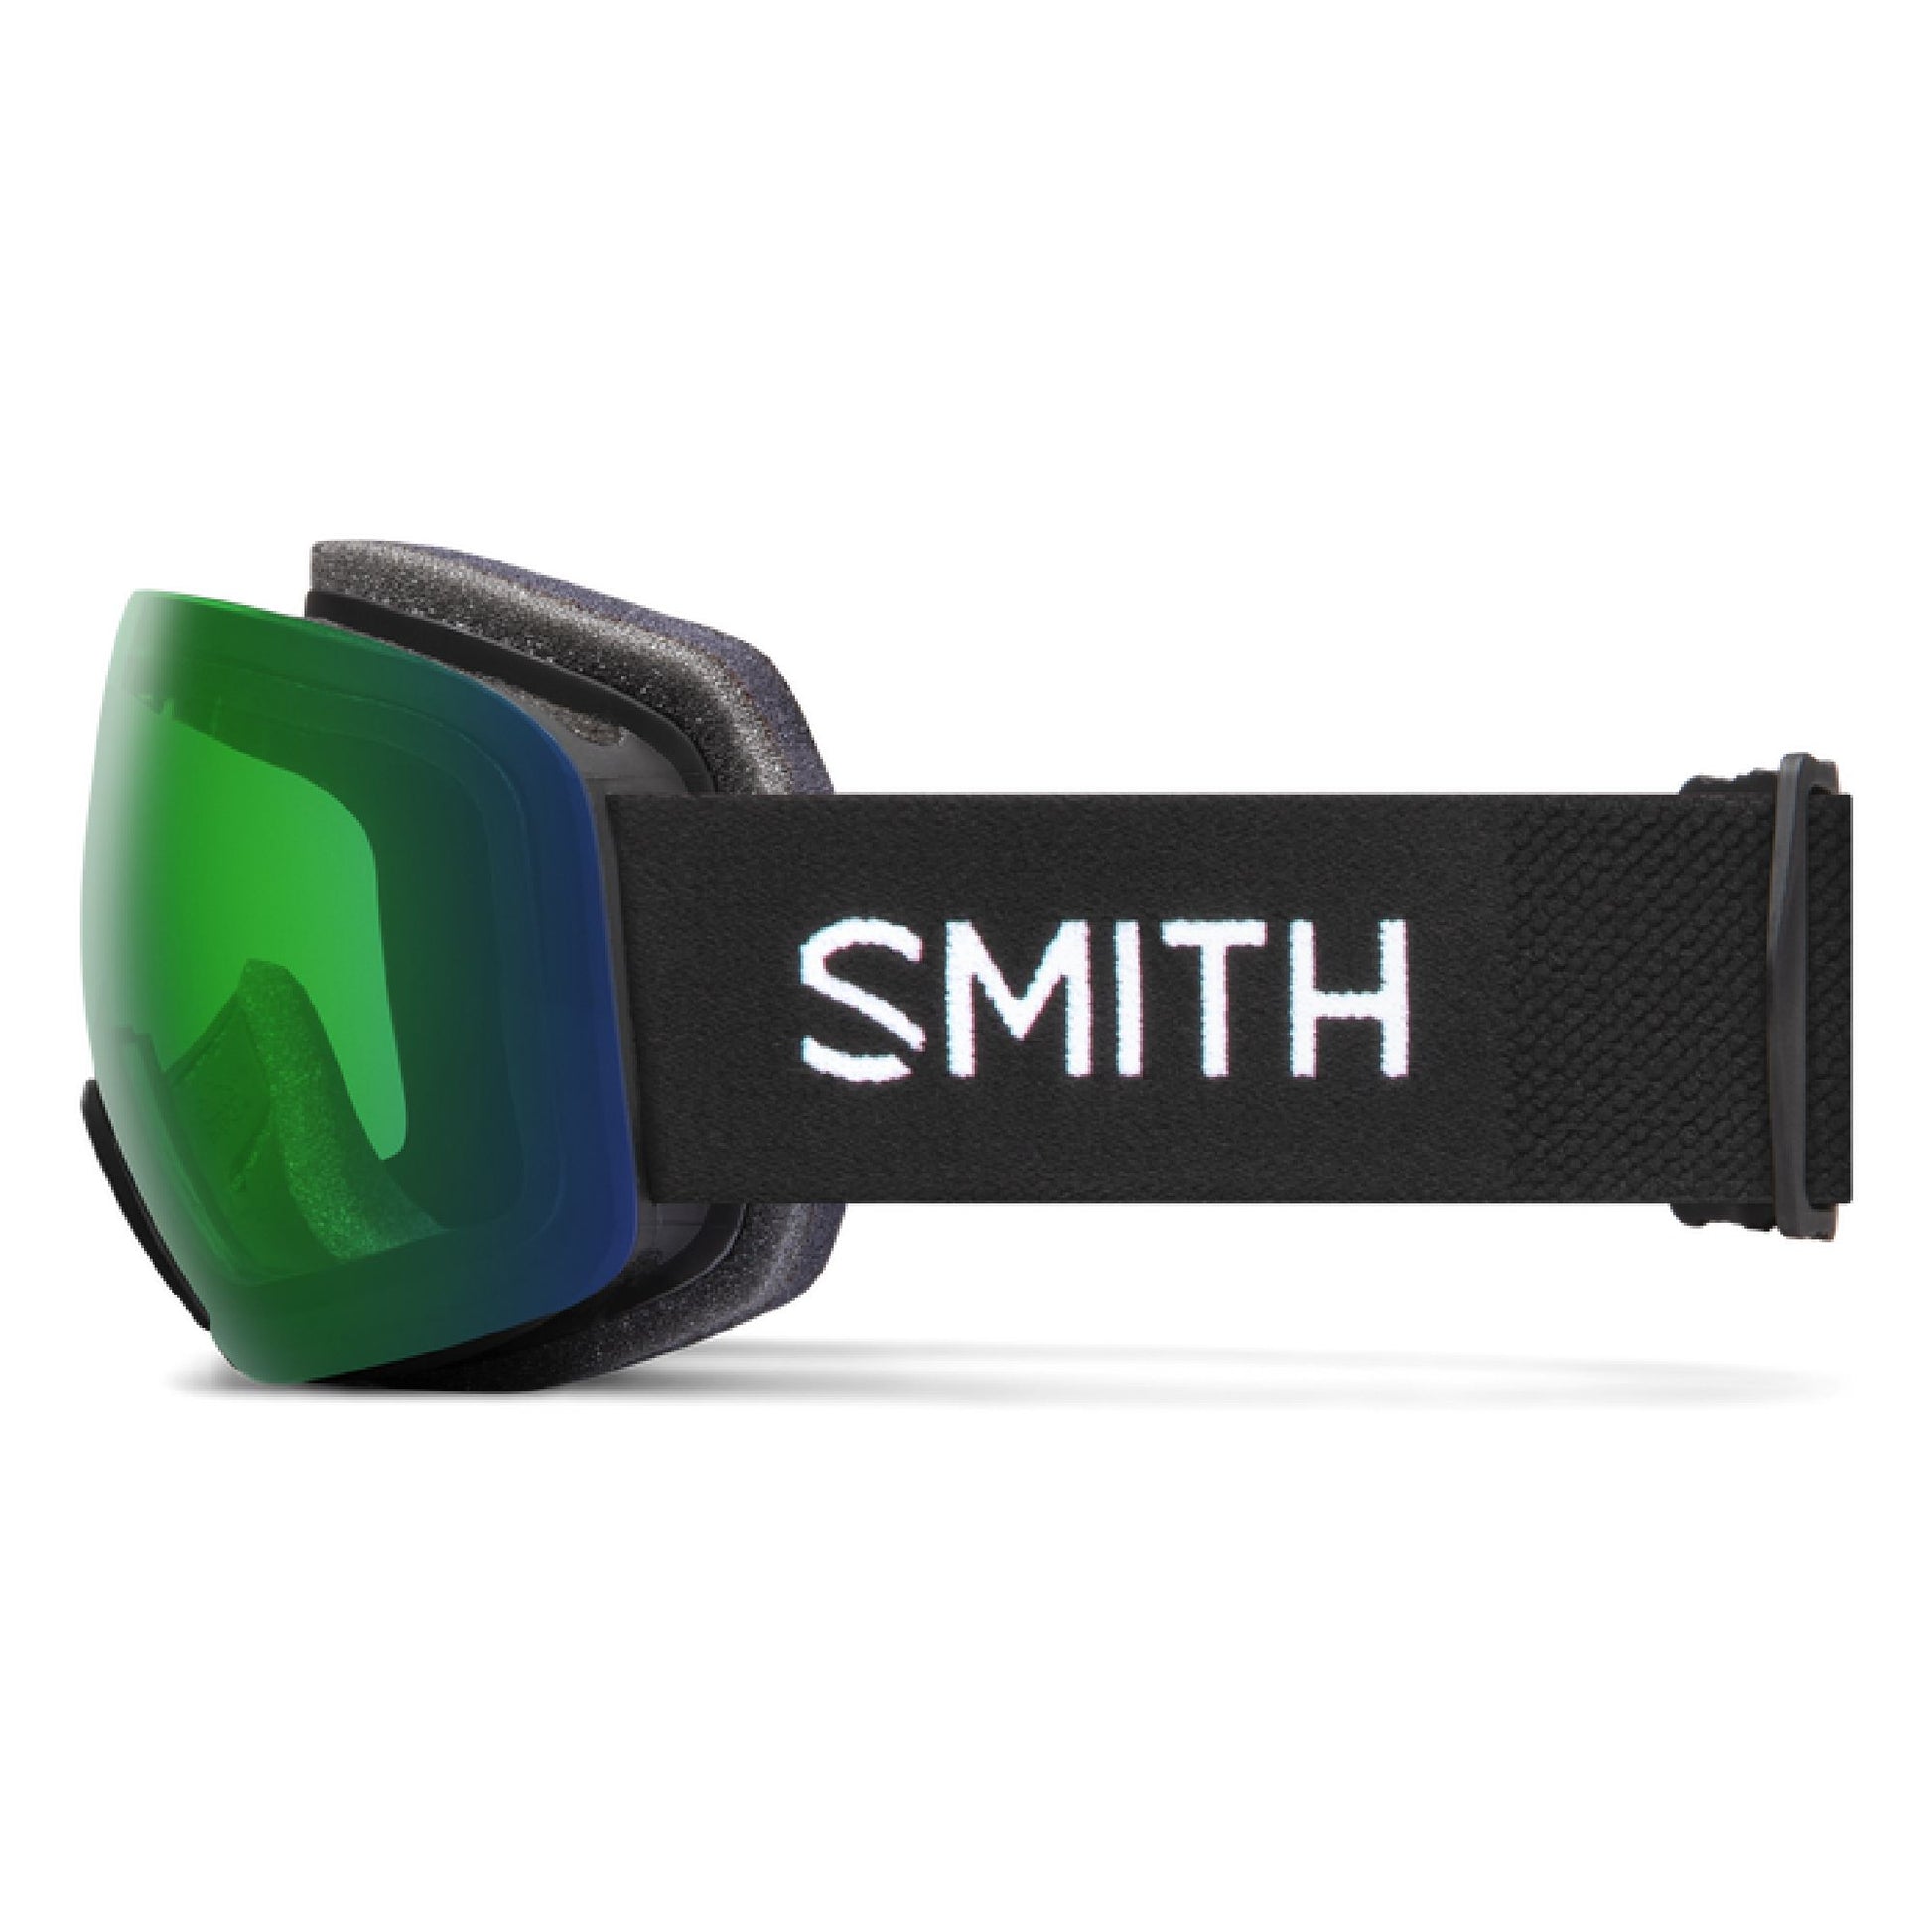 Smith Skyline Snow Goggle Black / ChromaPop Everyday Green Mirror Snow Goggles